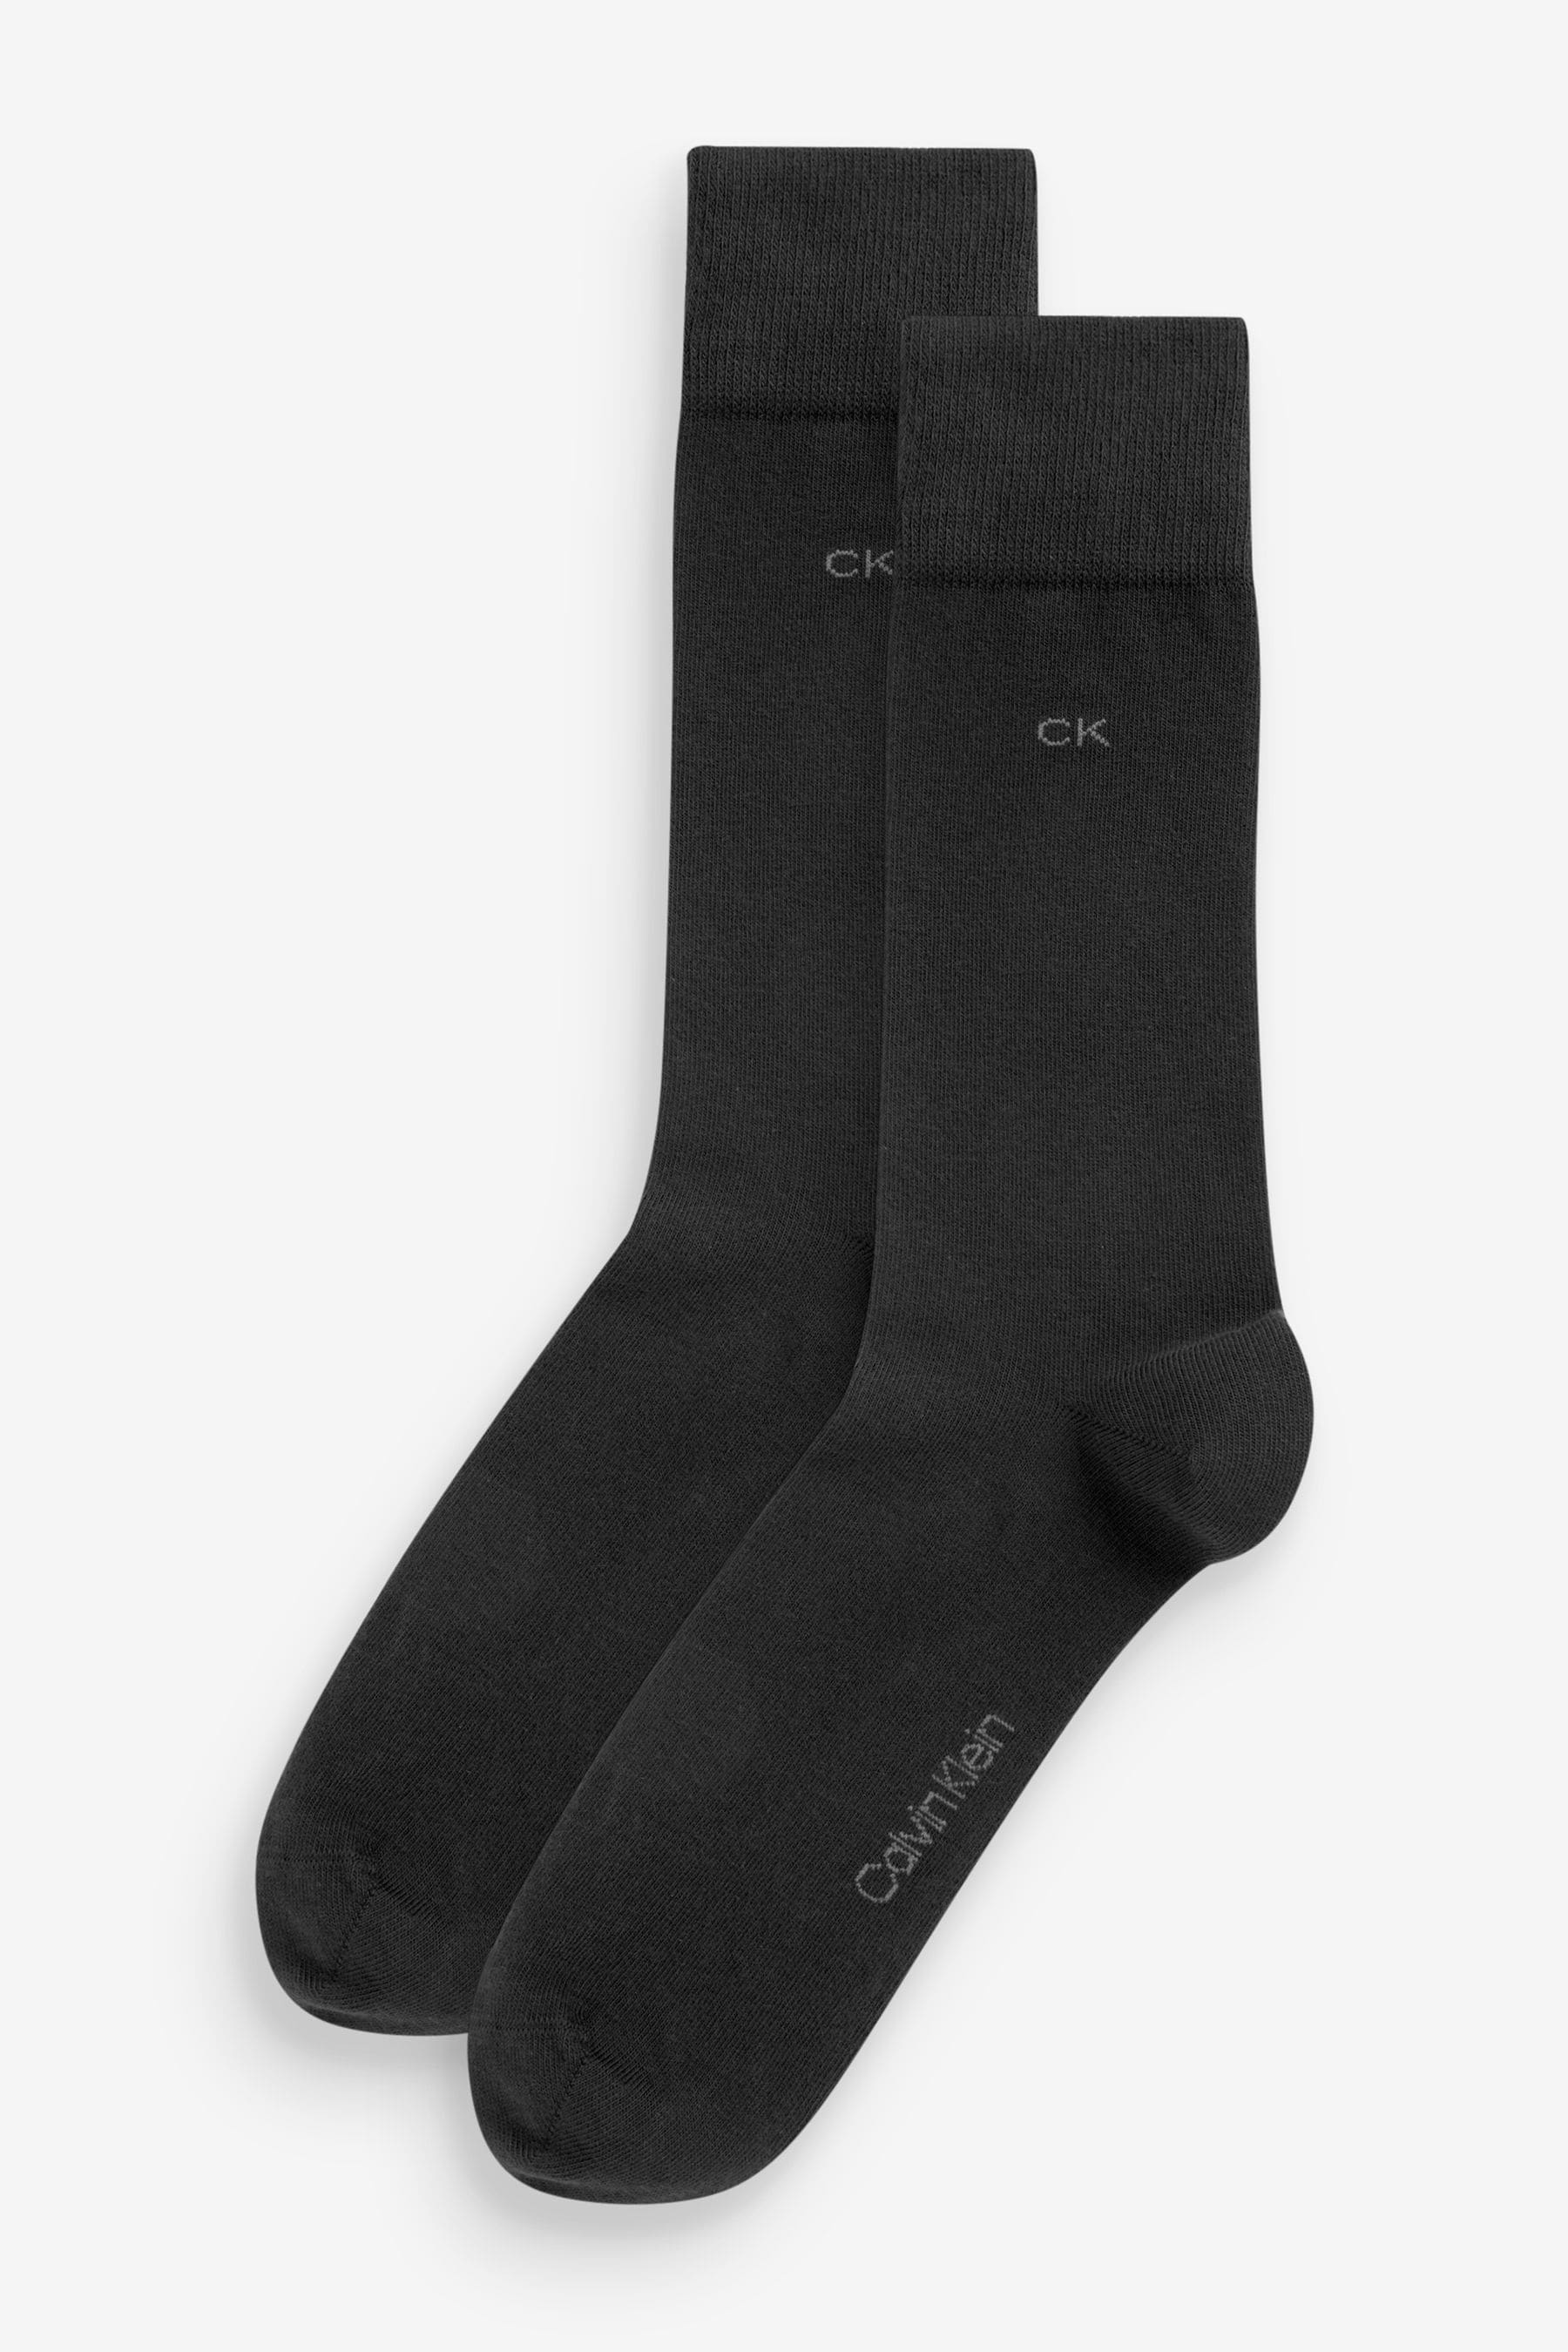 Buy Calvin Klein Mens Socks 2 Pack from the Next UK online shop